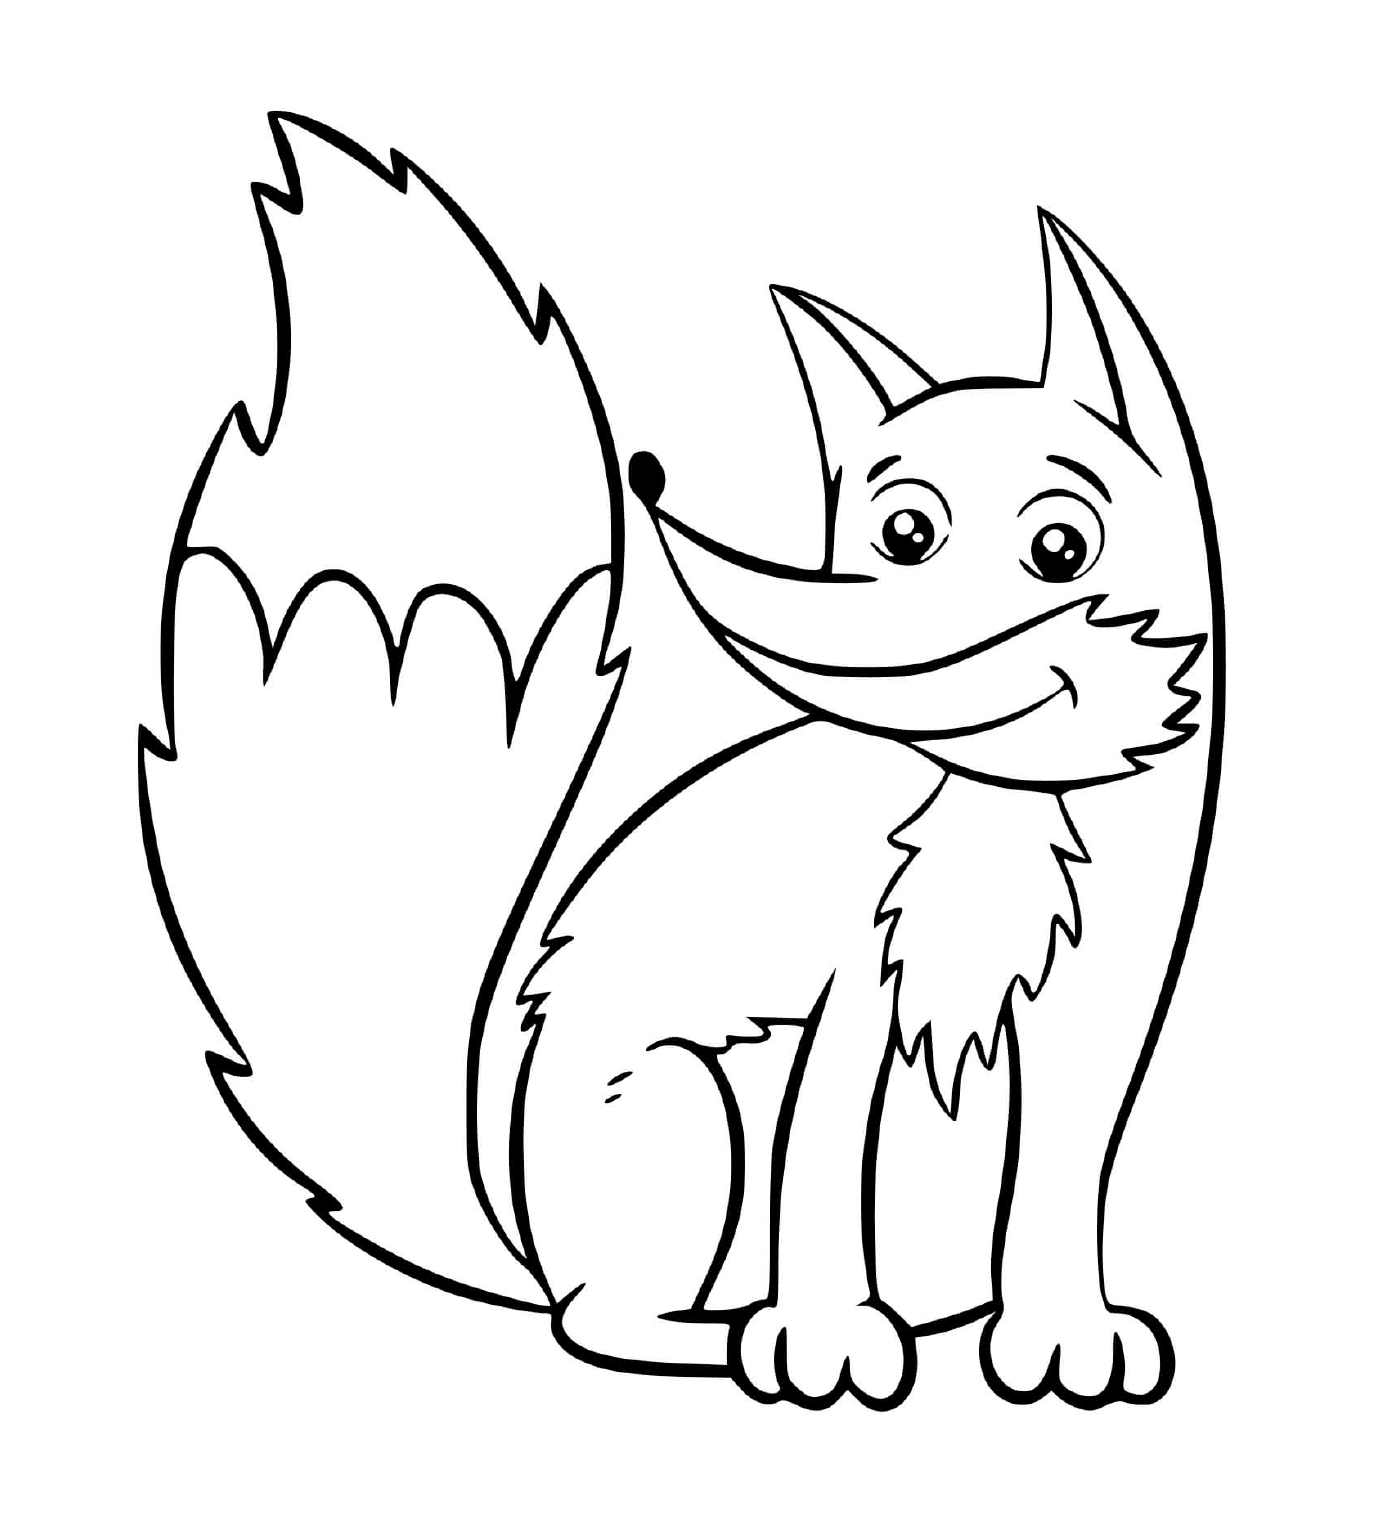  Little cute fox likes to eat 